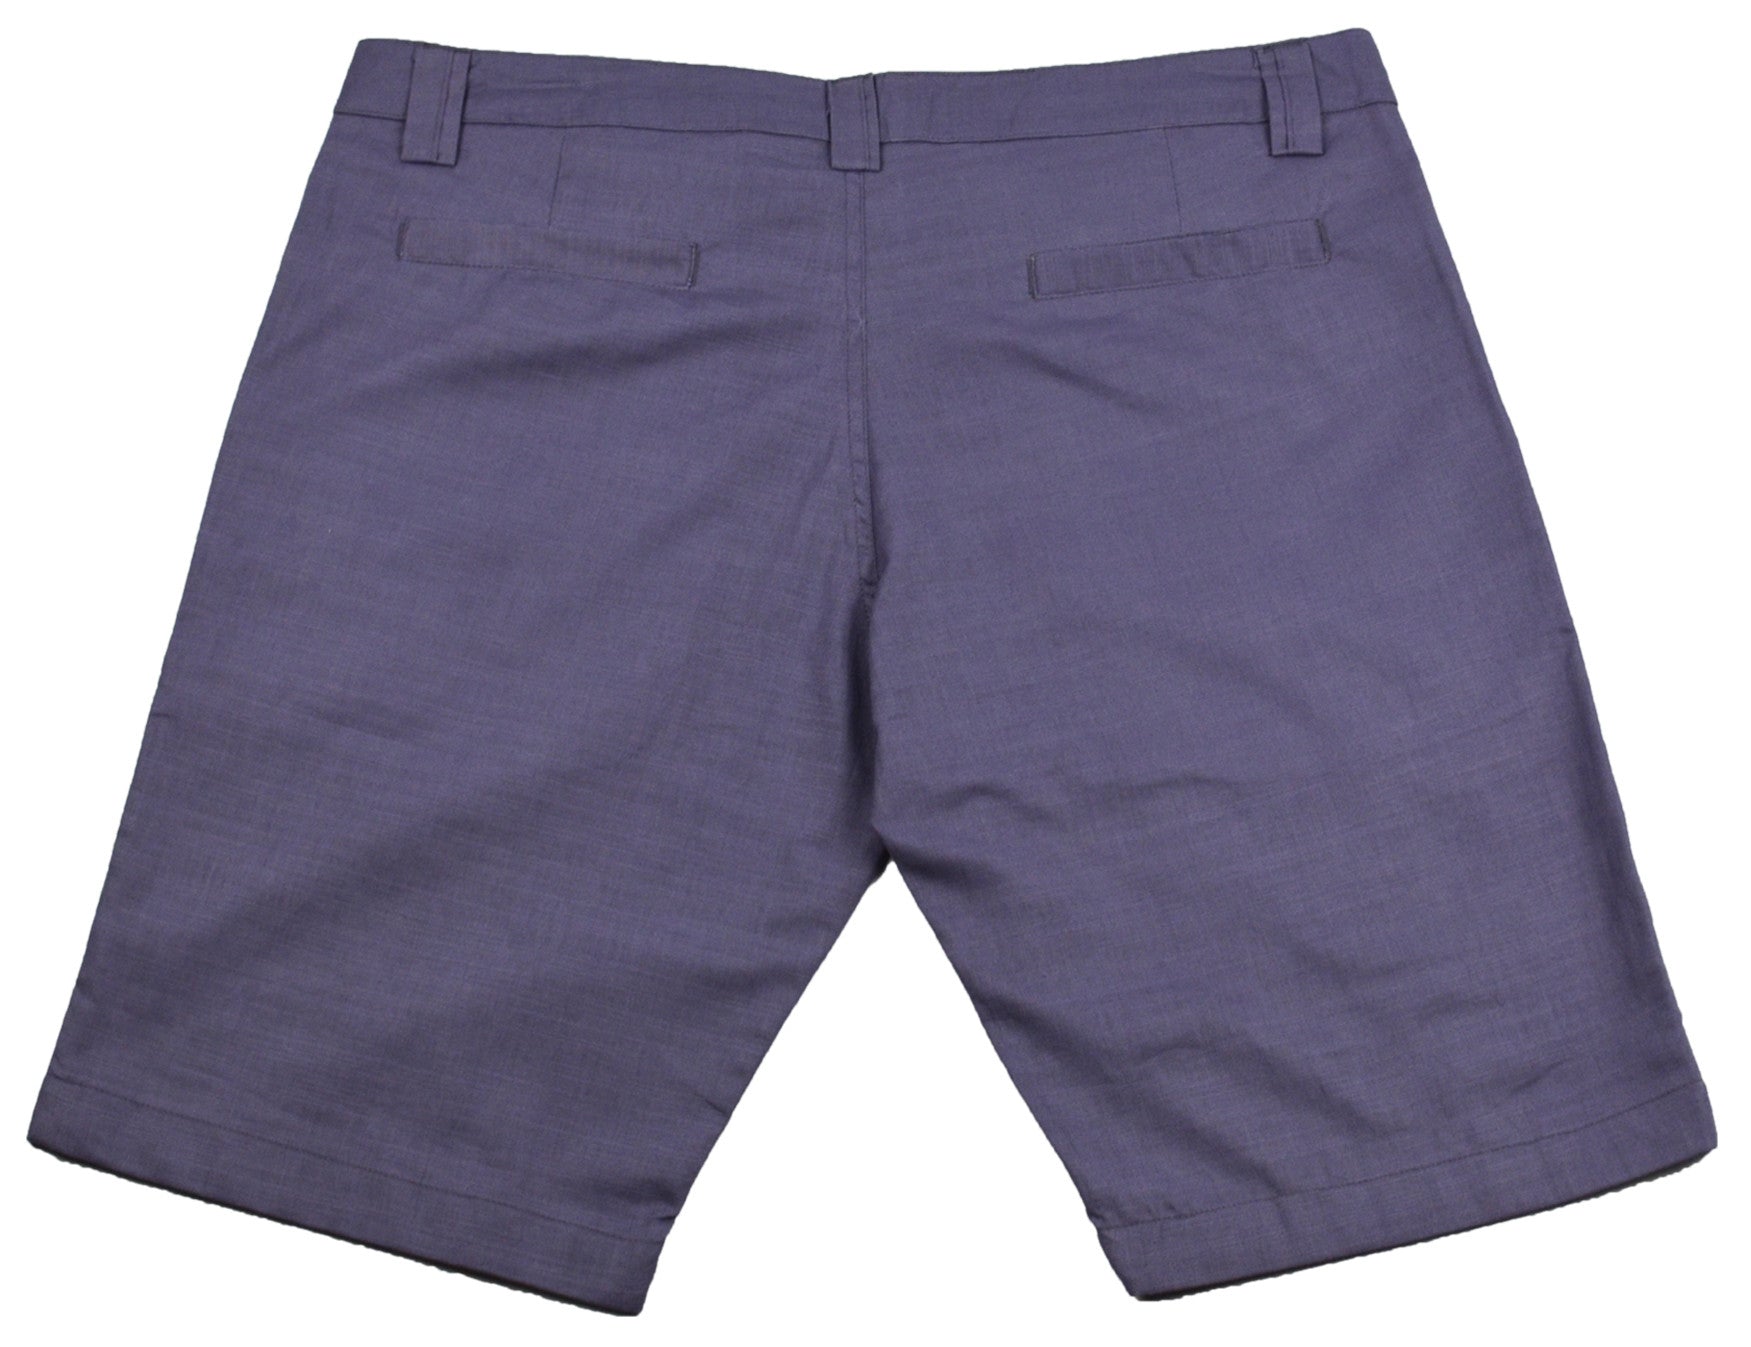 Purple/Gray Cotton Shorts - Happy Pants - 2